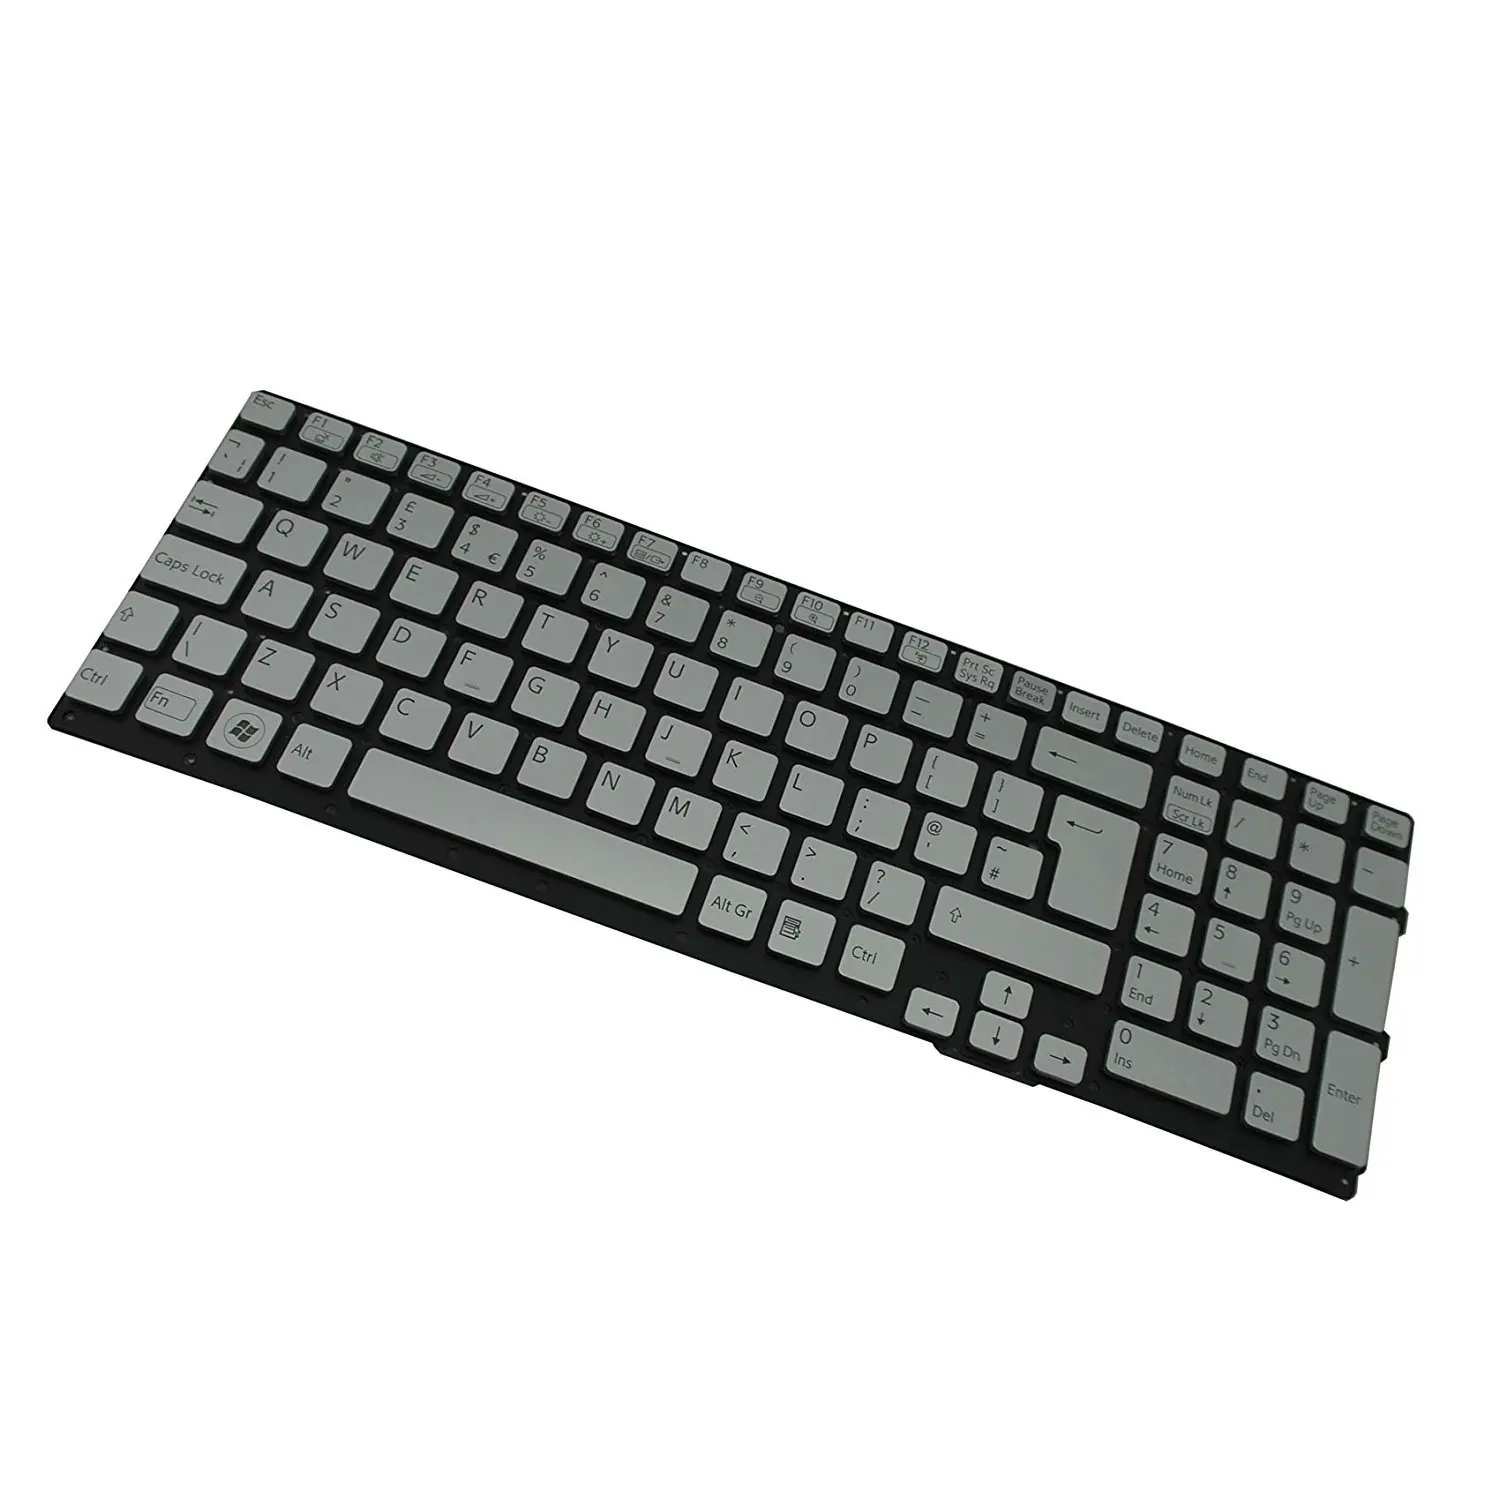 Keyboard for Acer Aspire 7735 7735G 7735Z 7735ZG 7736 7736G 7736Z 7740 7740G